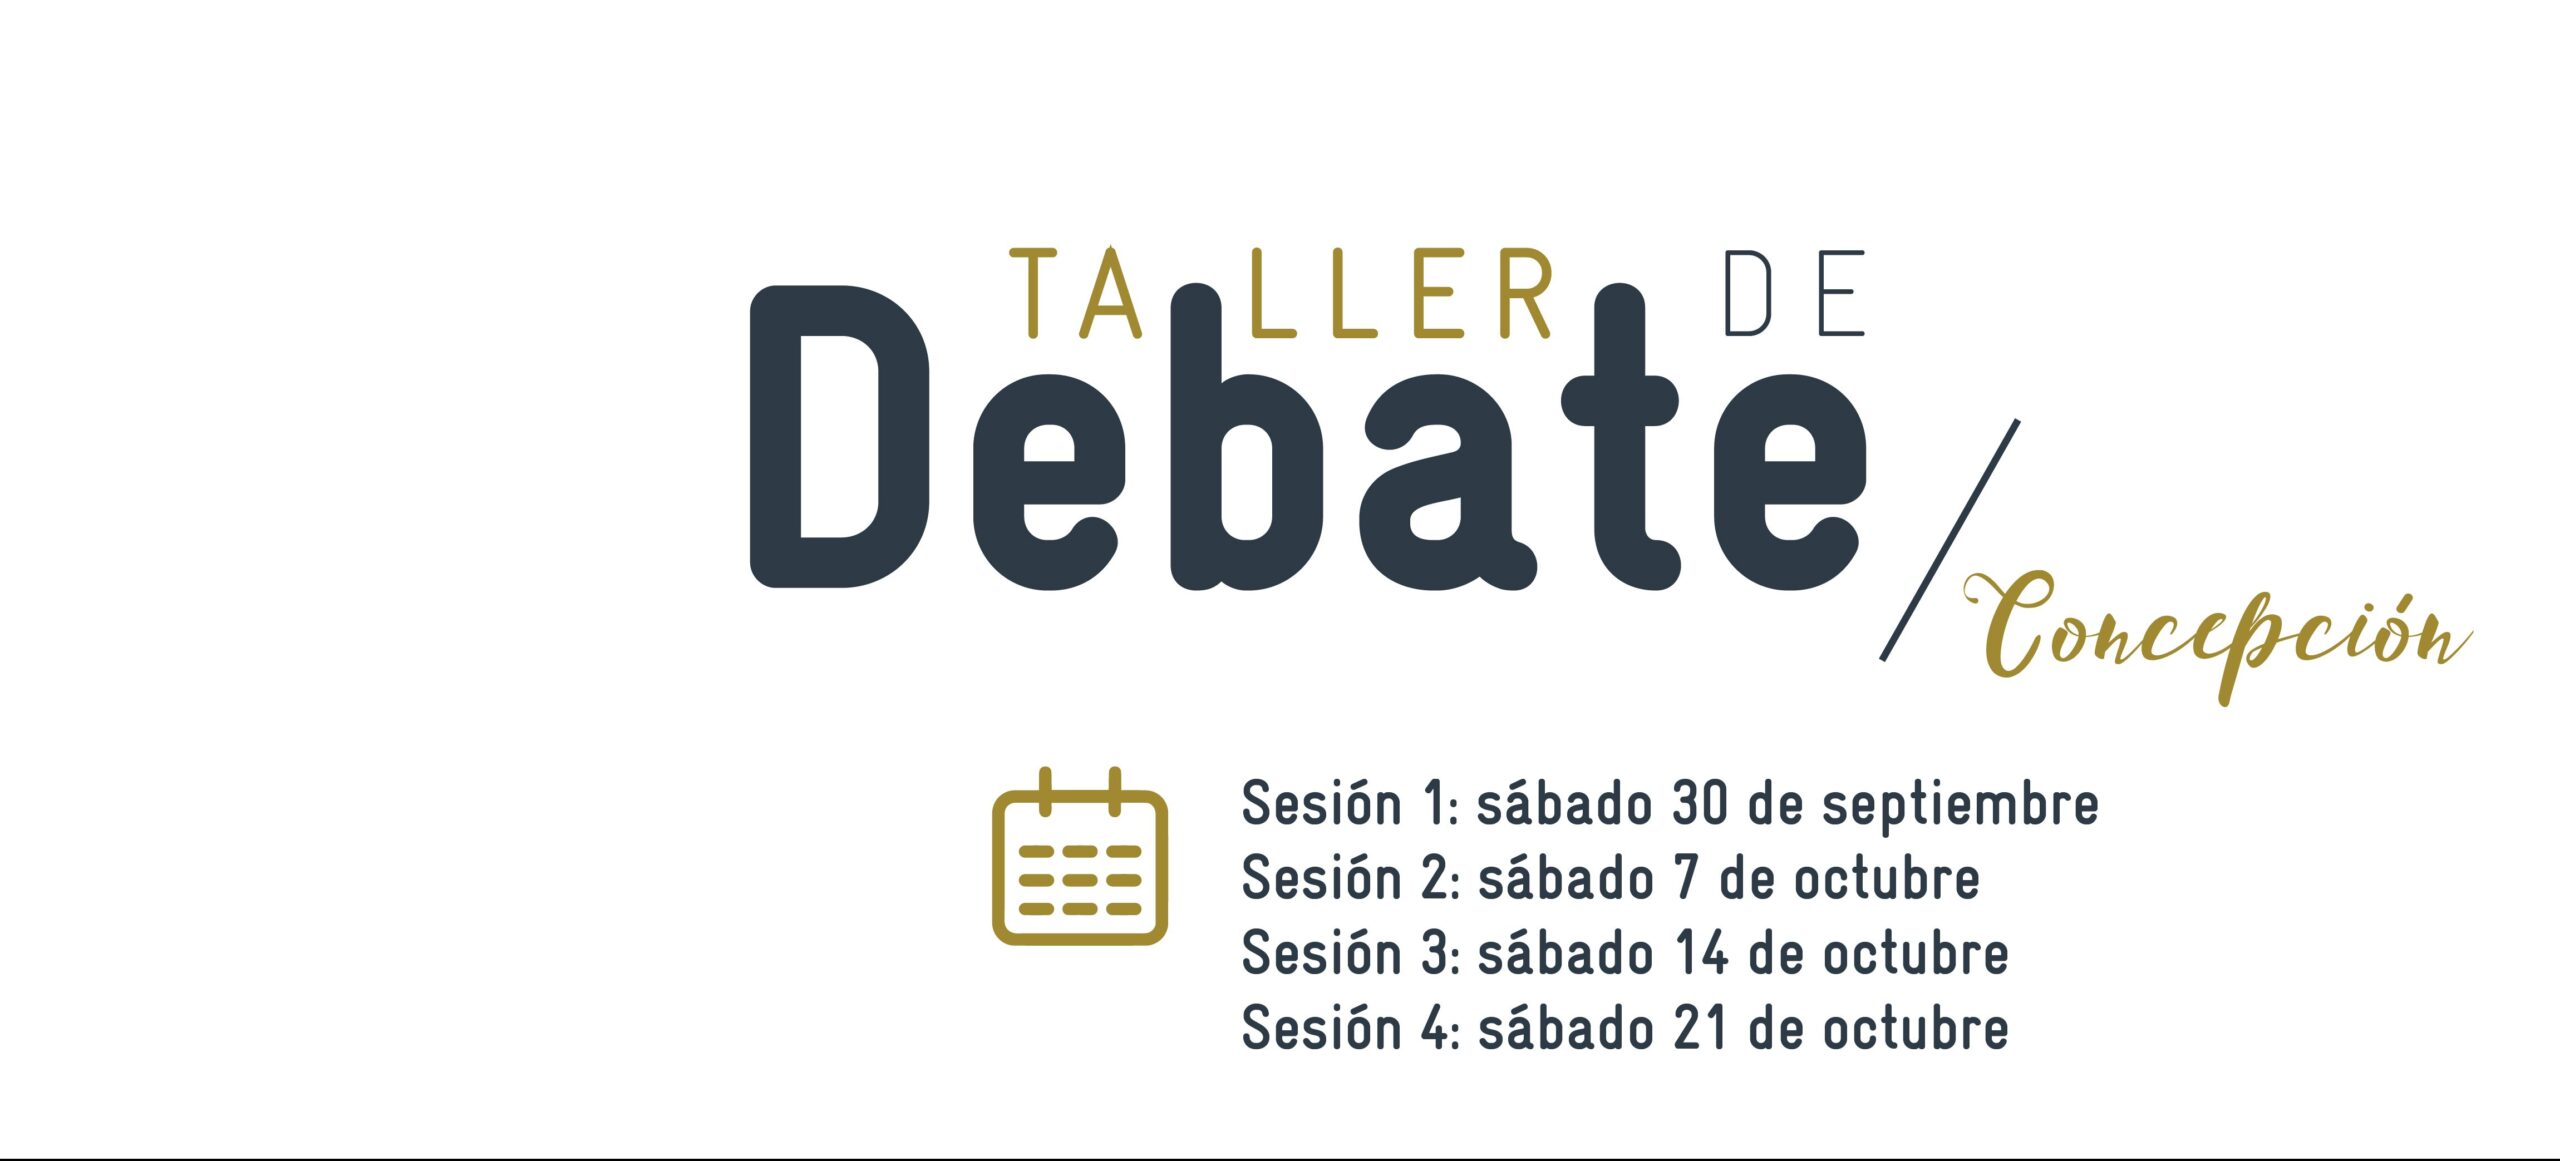 Taller de debate en Concepción